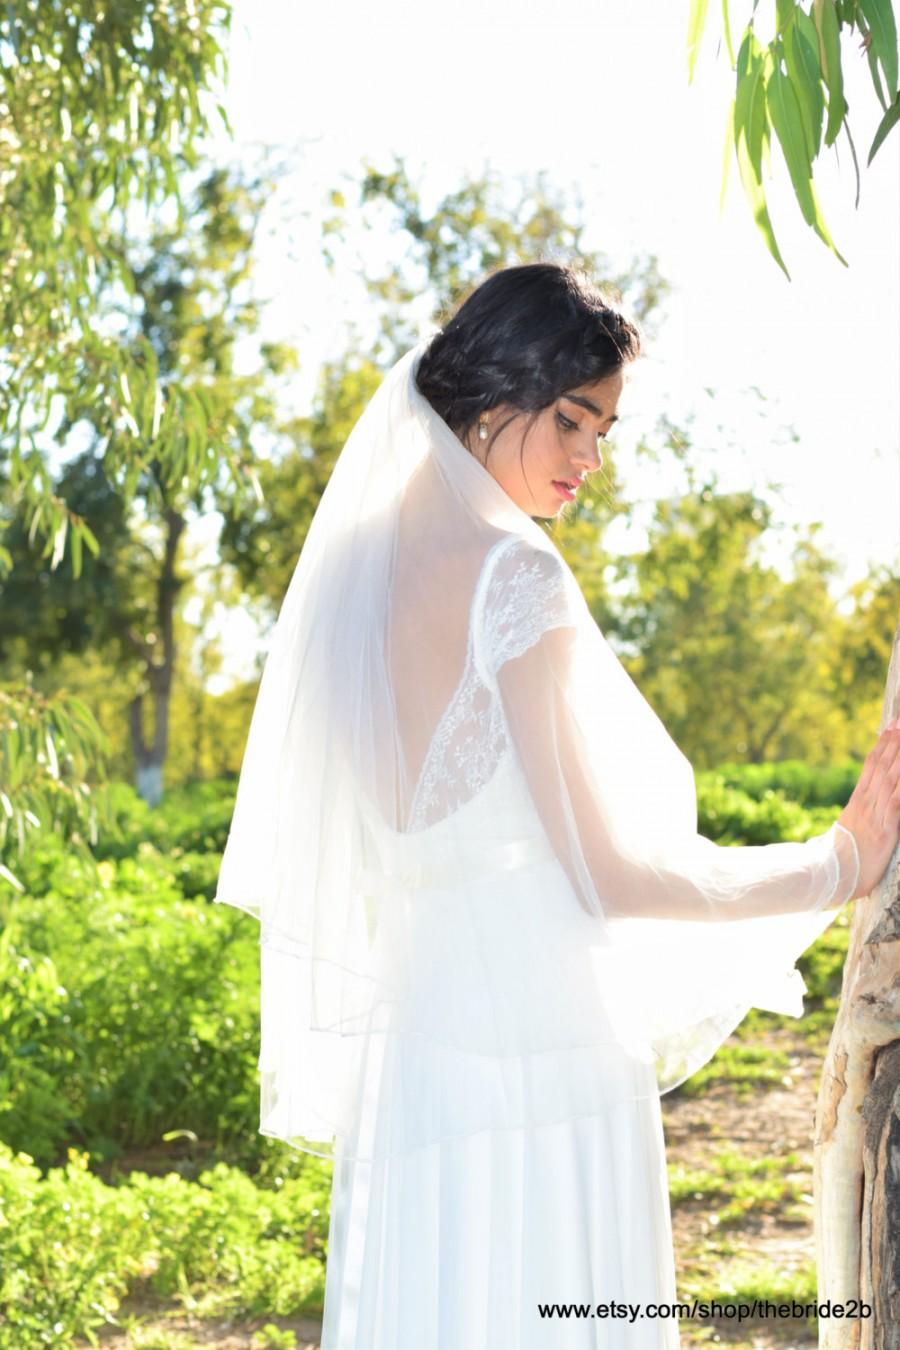 Hochzeit - Wedding Bridal Veil, wedding veil, Bride Veil, ivory white bridal veil Fingertip length Wedding Bridal Veil white, ivory,